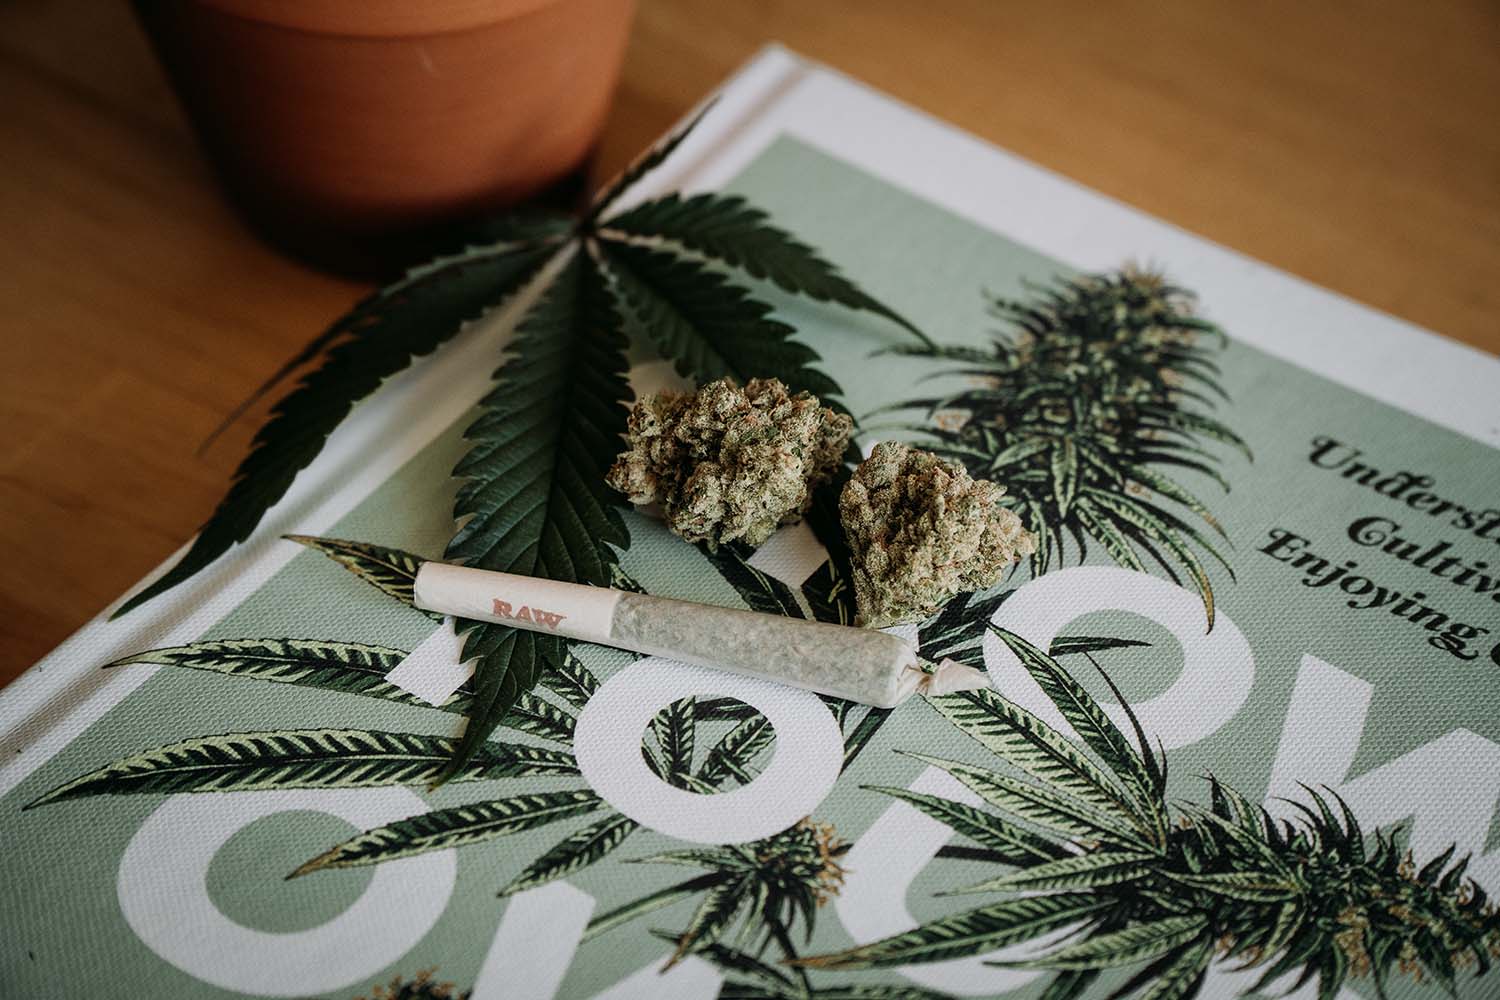 Finding Medical Cannabis in South Dakota